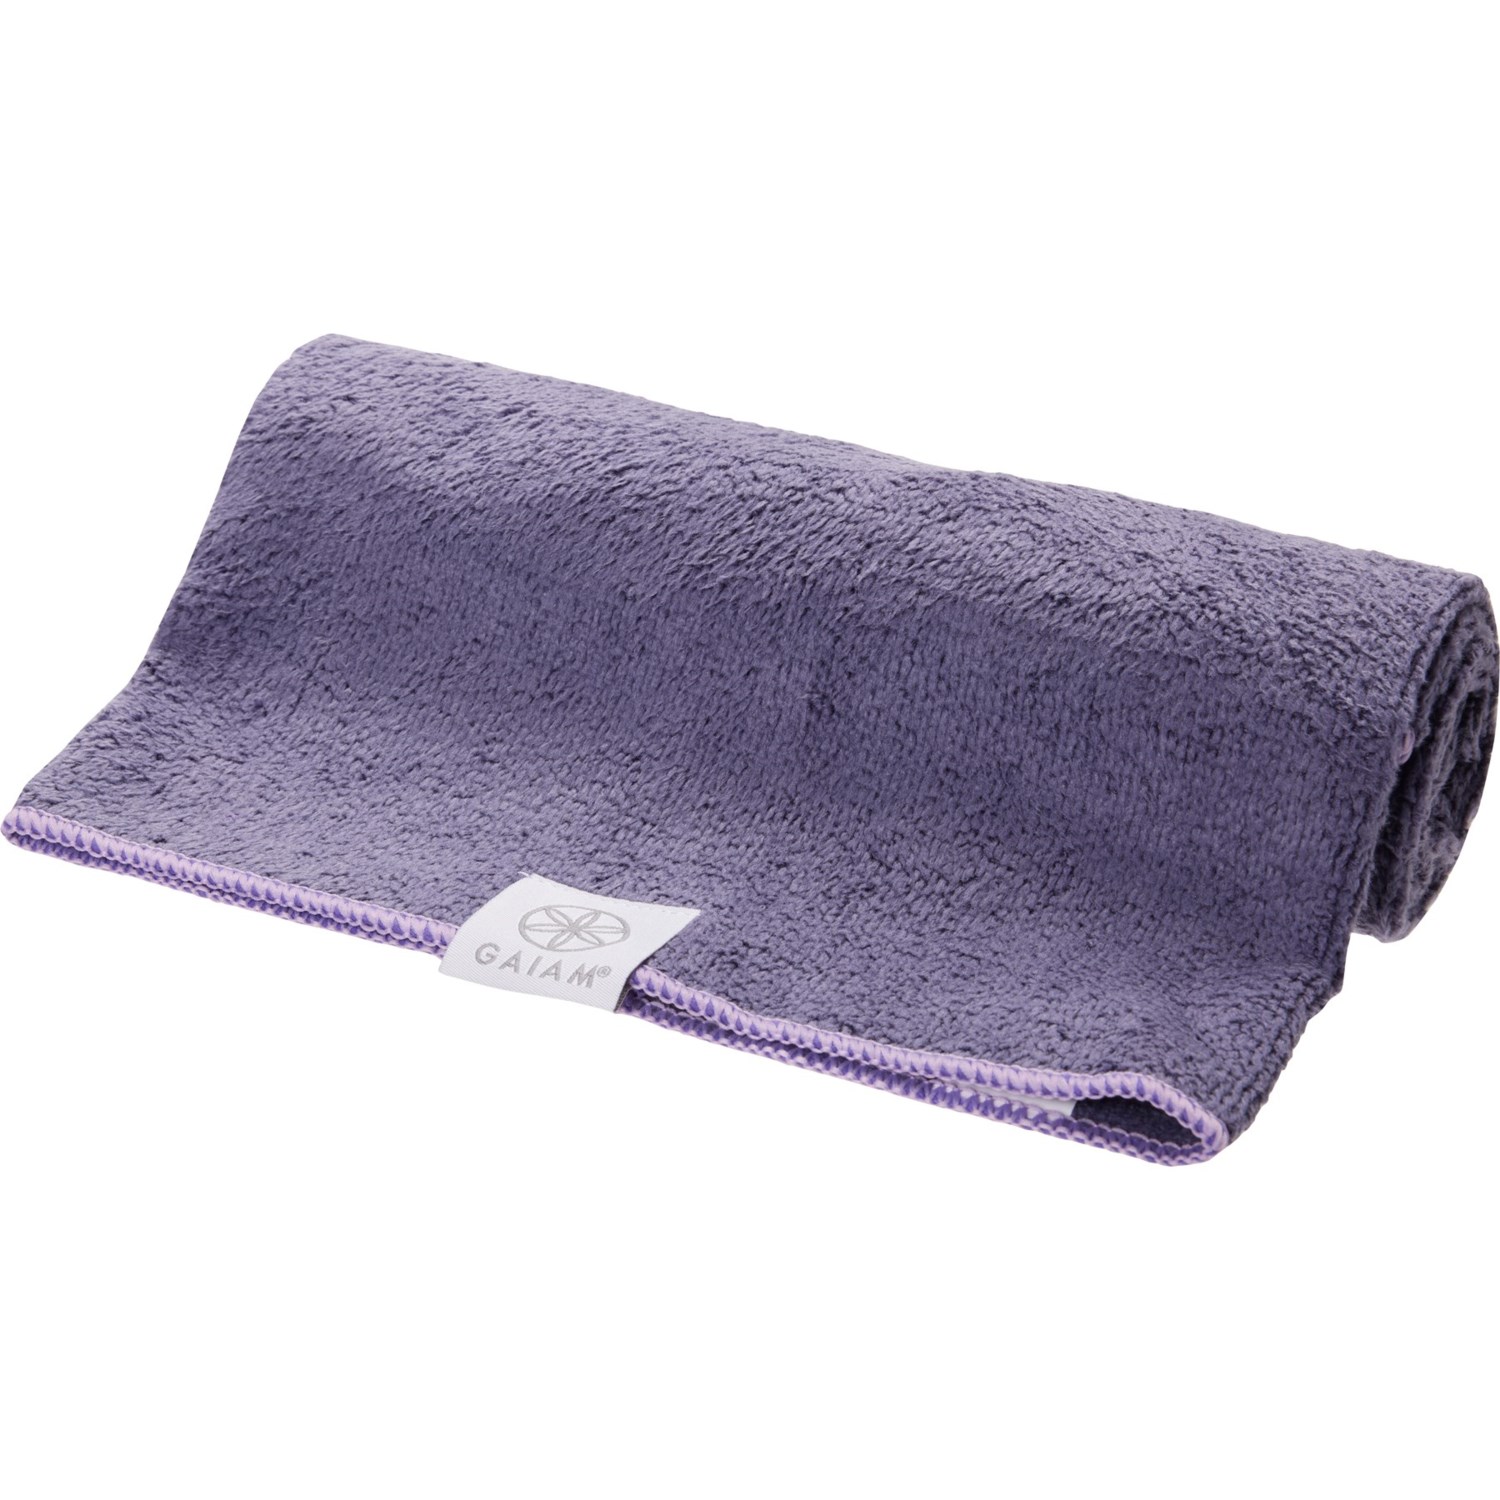 Gaiam Yoga Hand Towel - Save 30%